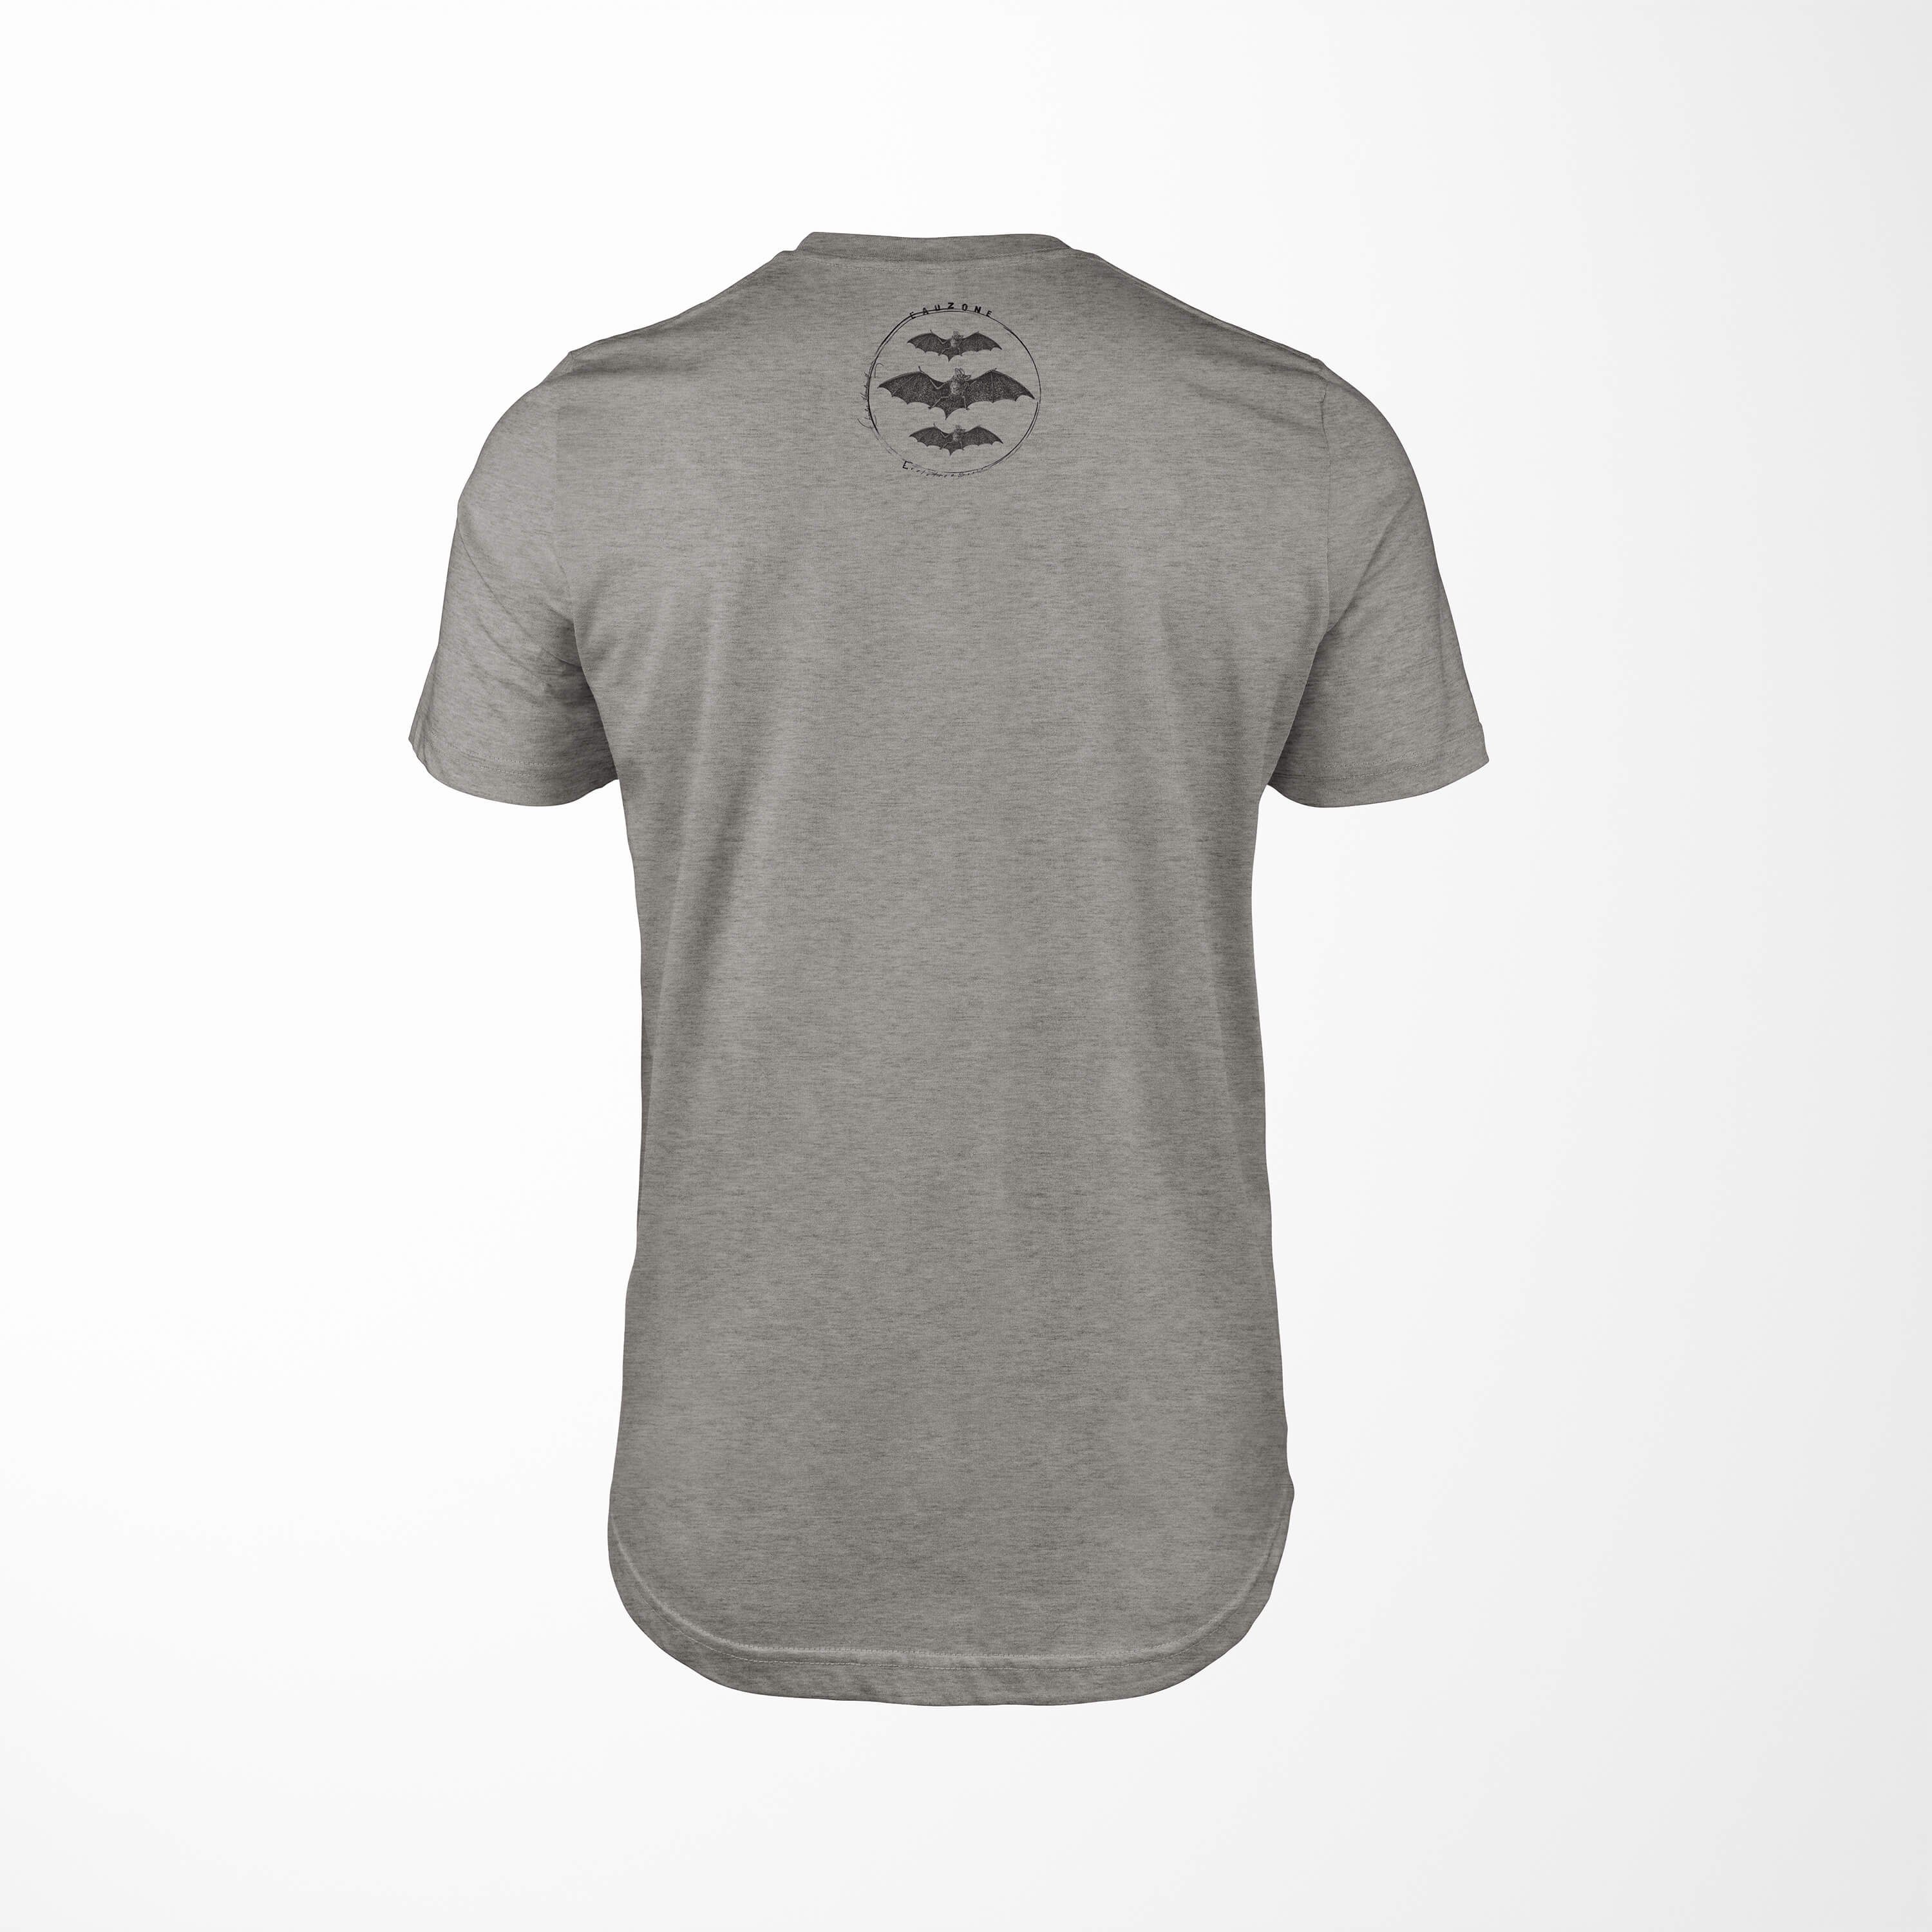 Ash T-Shirt Herren Art T-Shirt Evolution Fledermaus Sinus